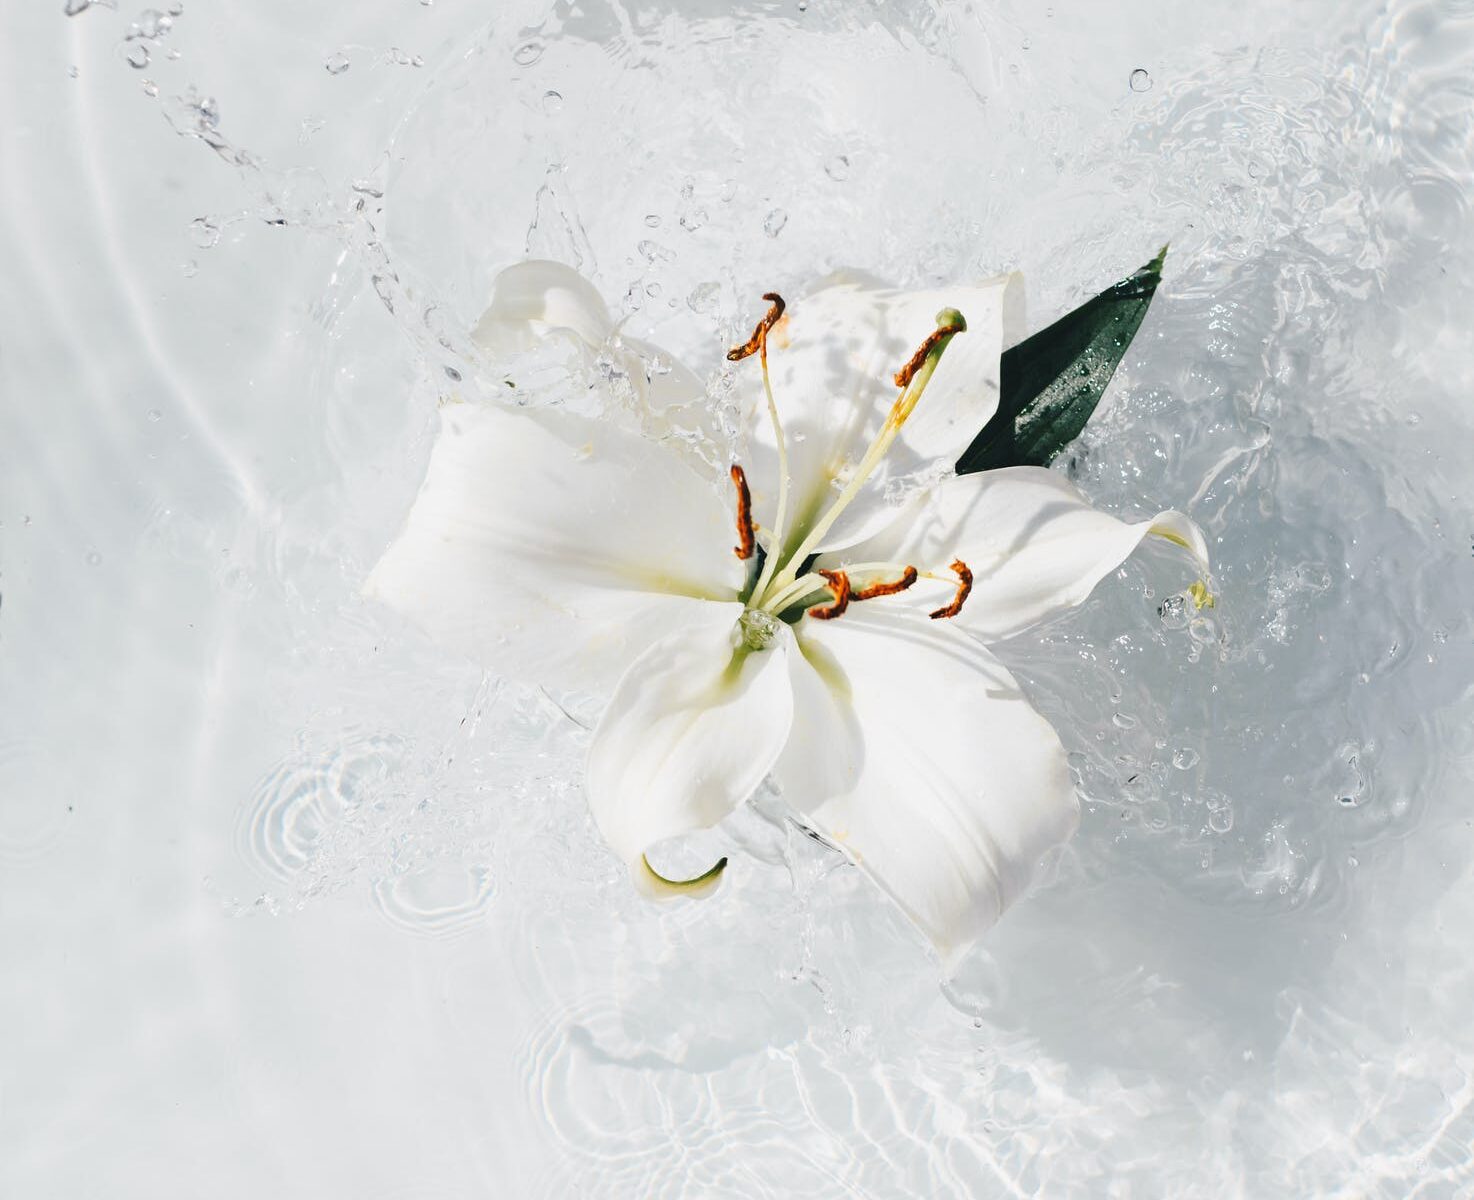 splashing water around a white lily